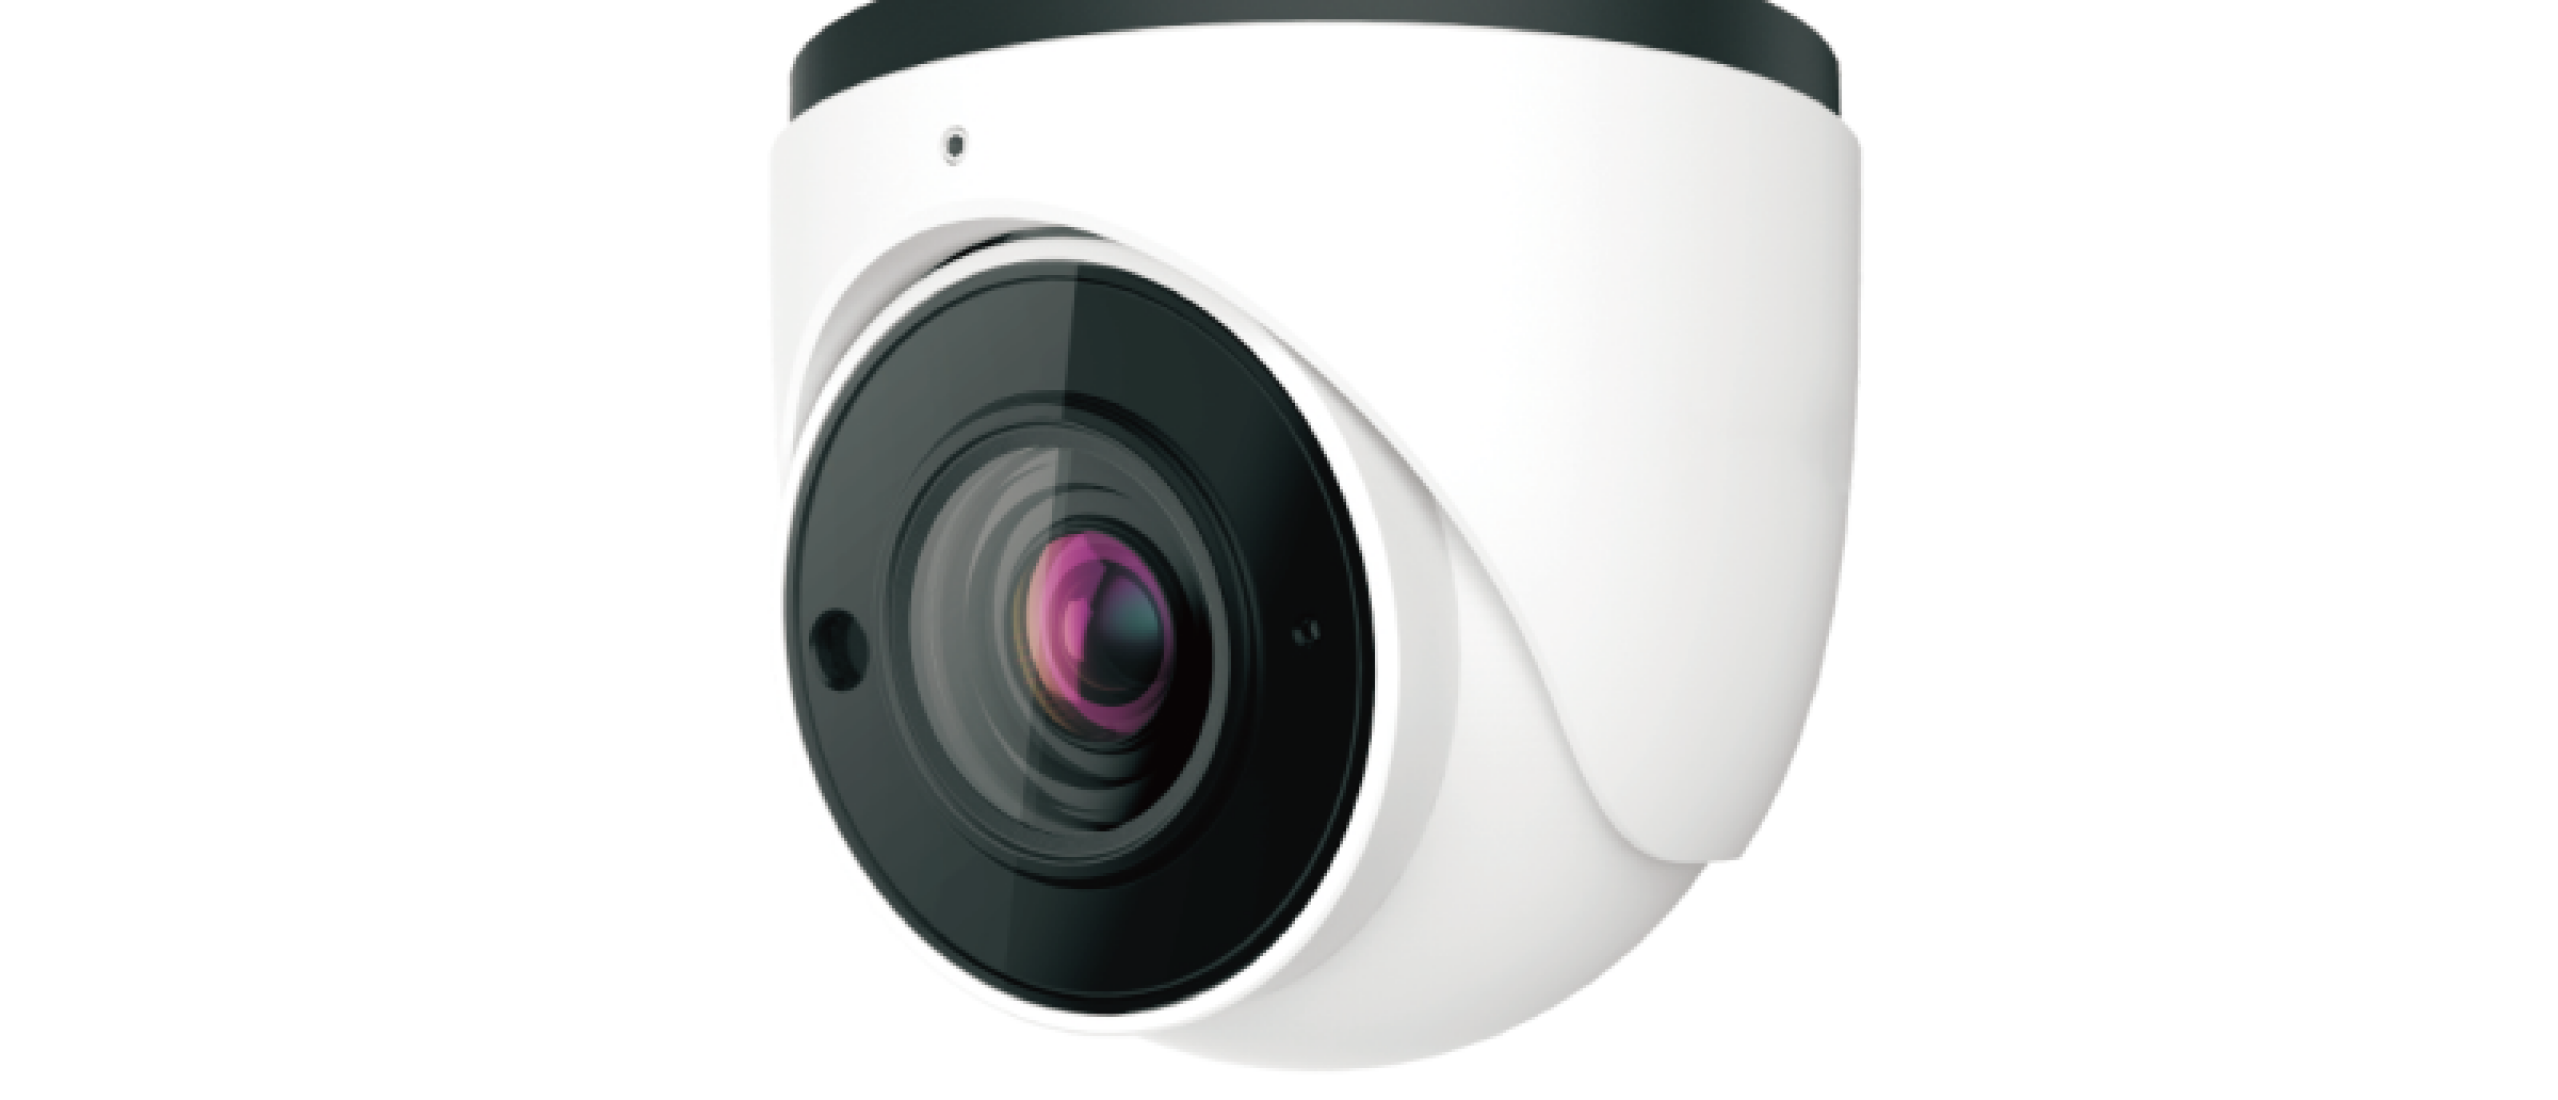 Vista NDAA compliant IP camera's